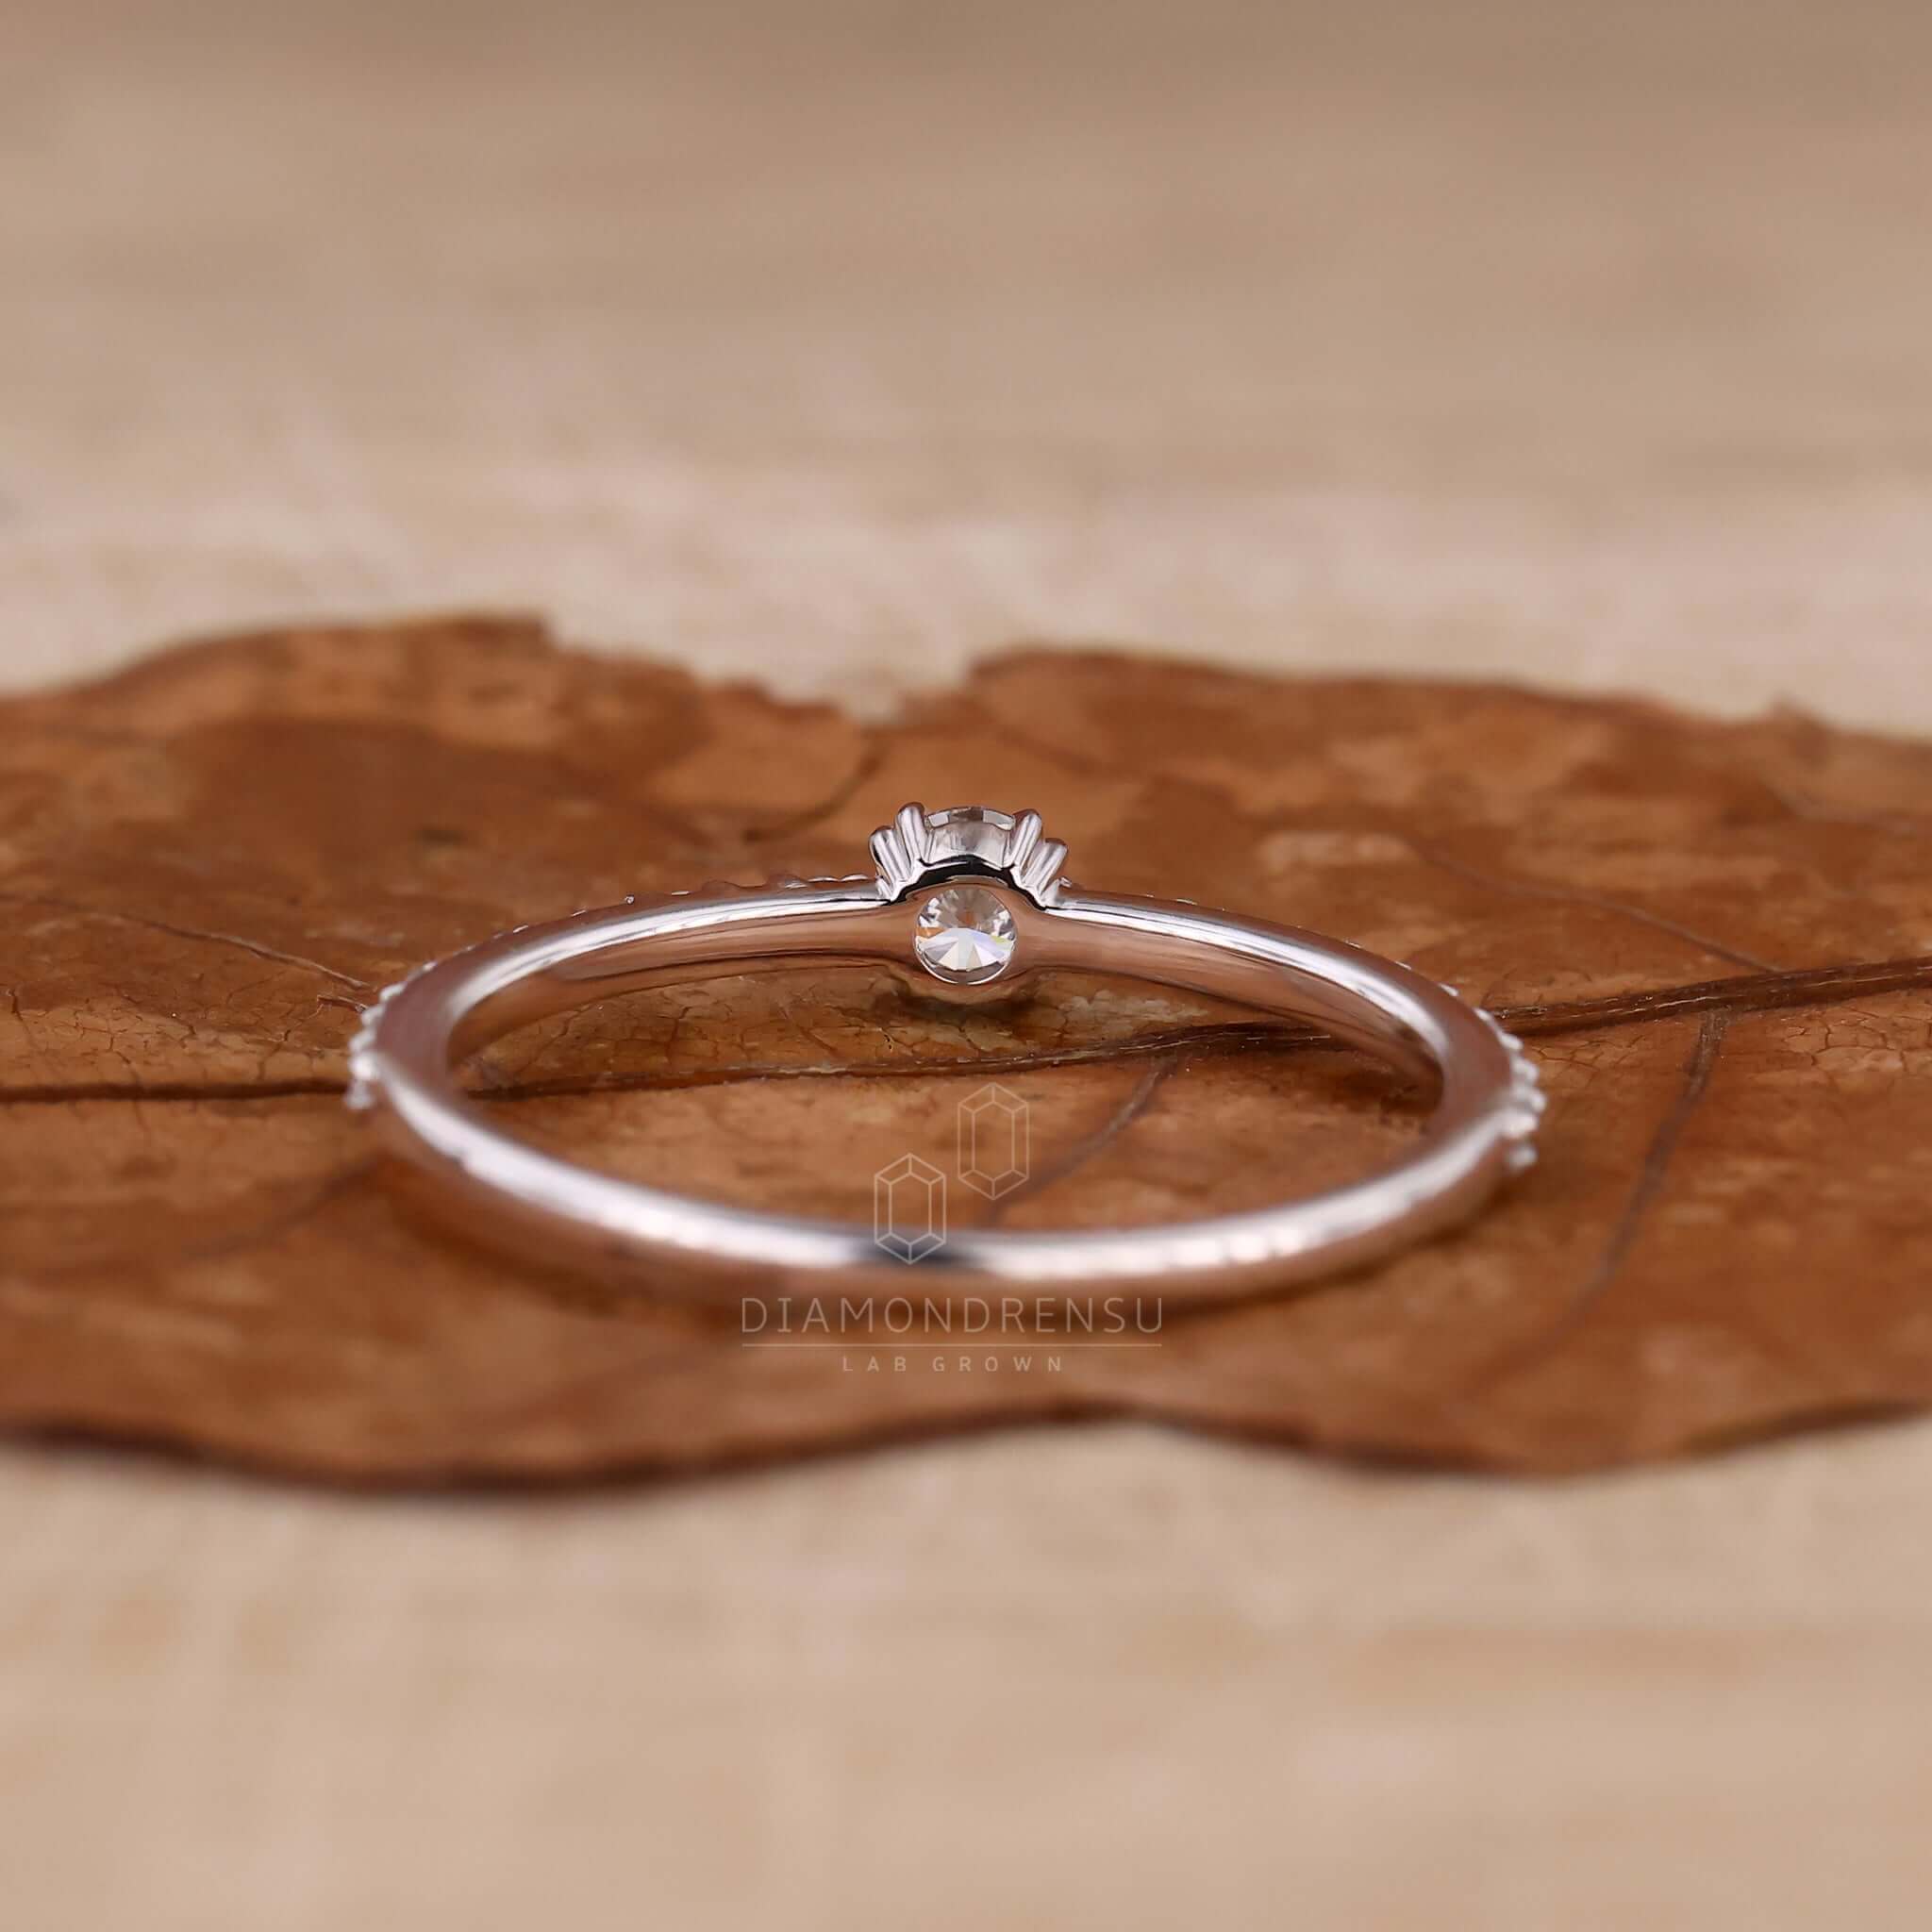 Buy Minimalist Round Diamond Engagement Ring Online